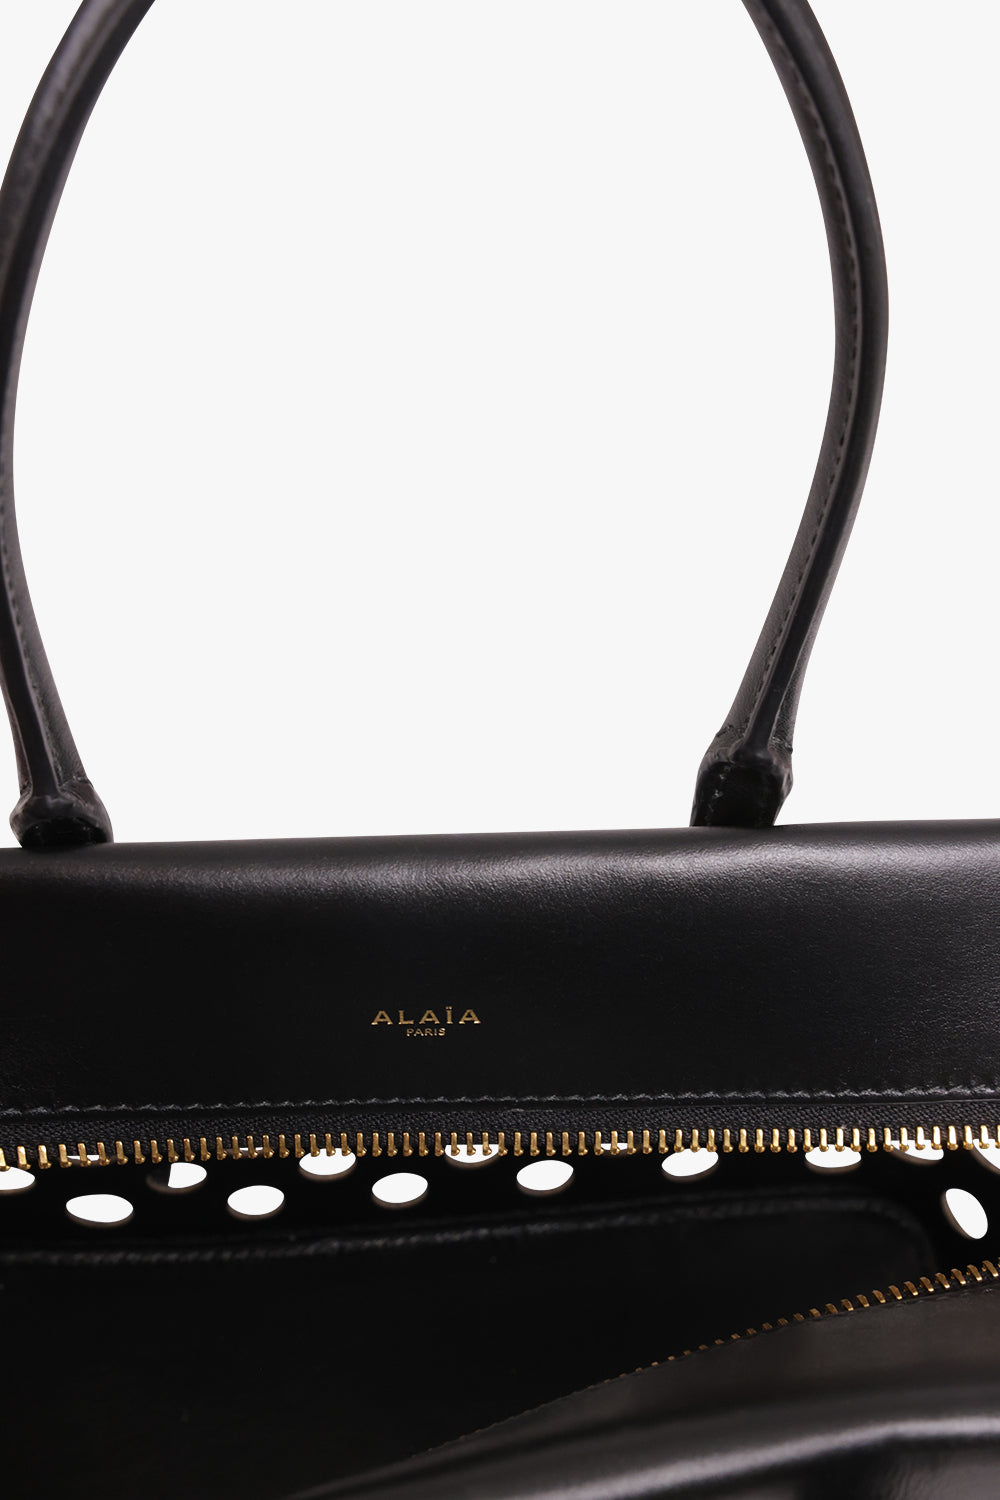 ALAIA BAGS BLACK / 999 - NOIR Neo Mina 20 Perforated Bag | Black